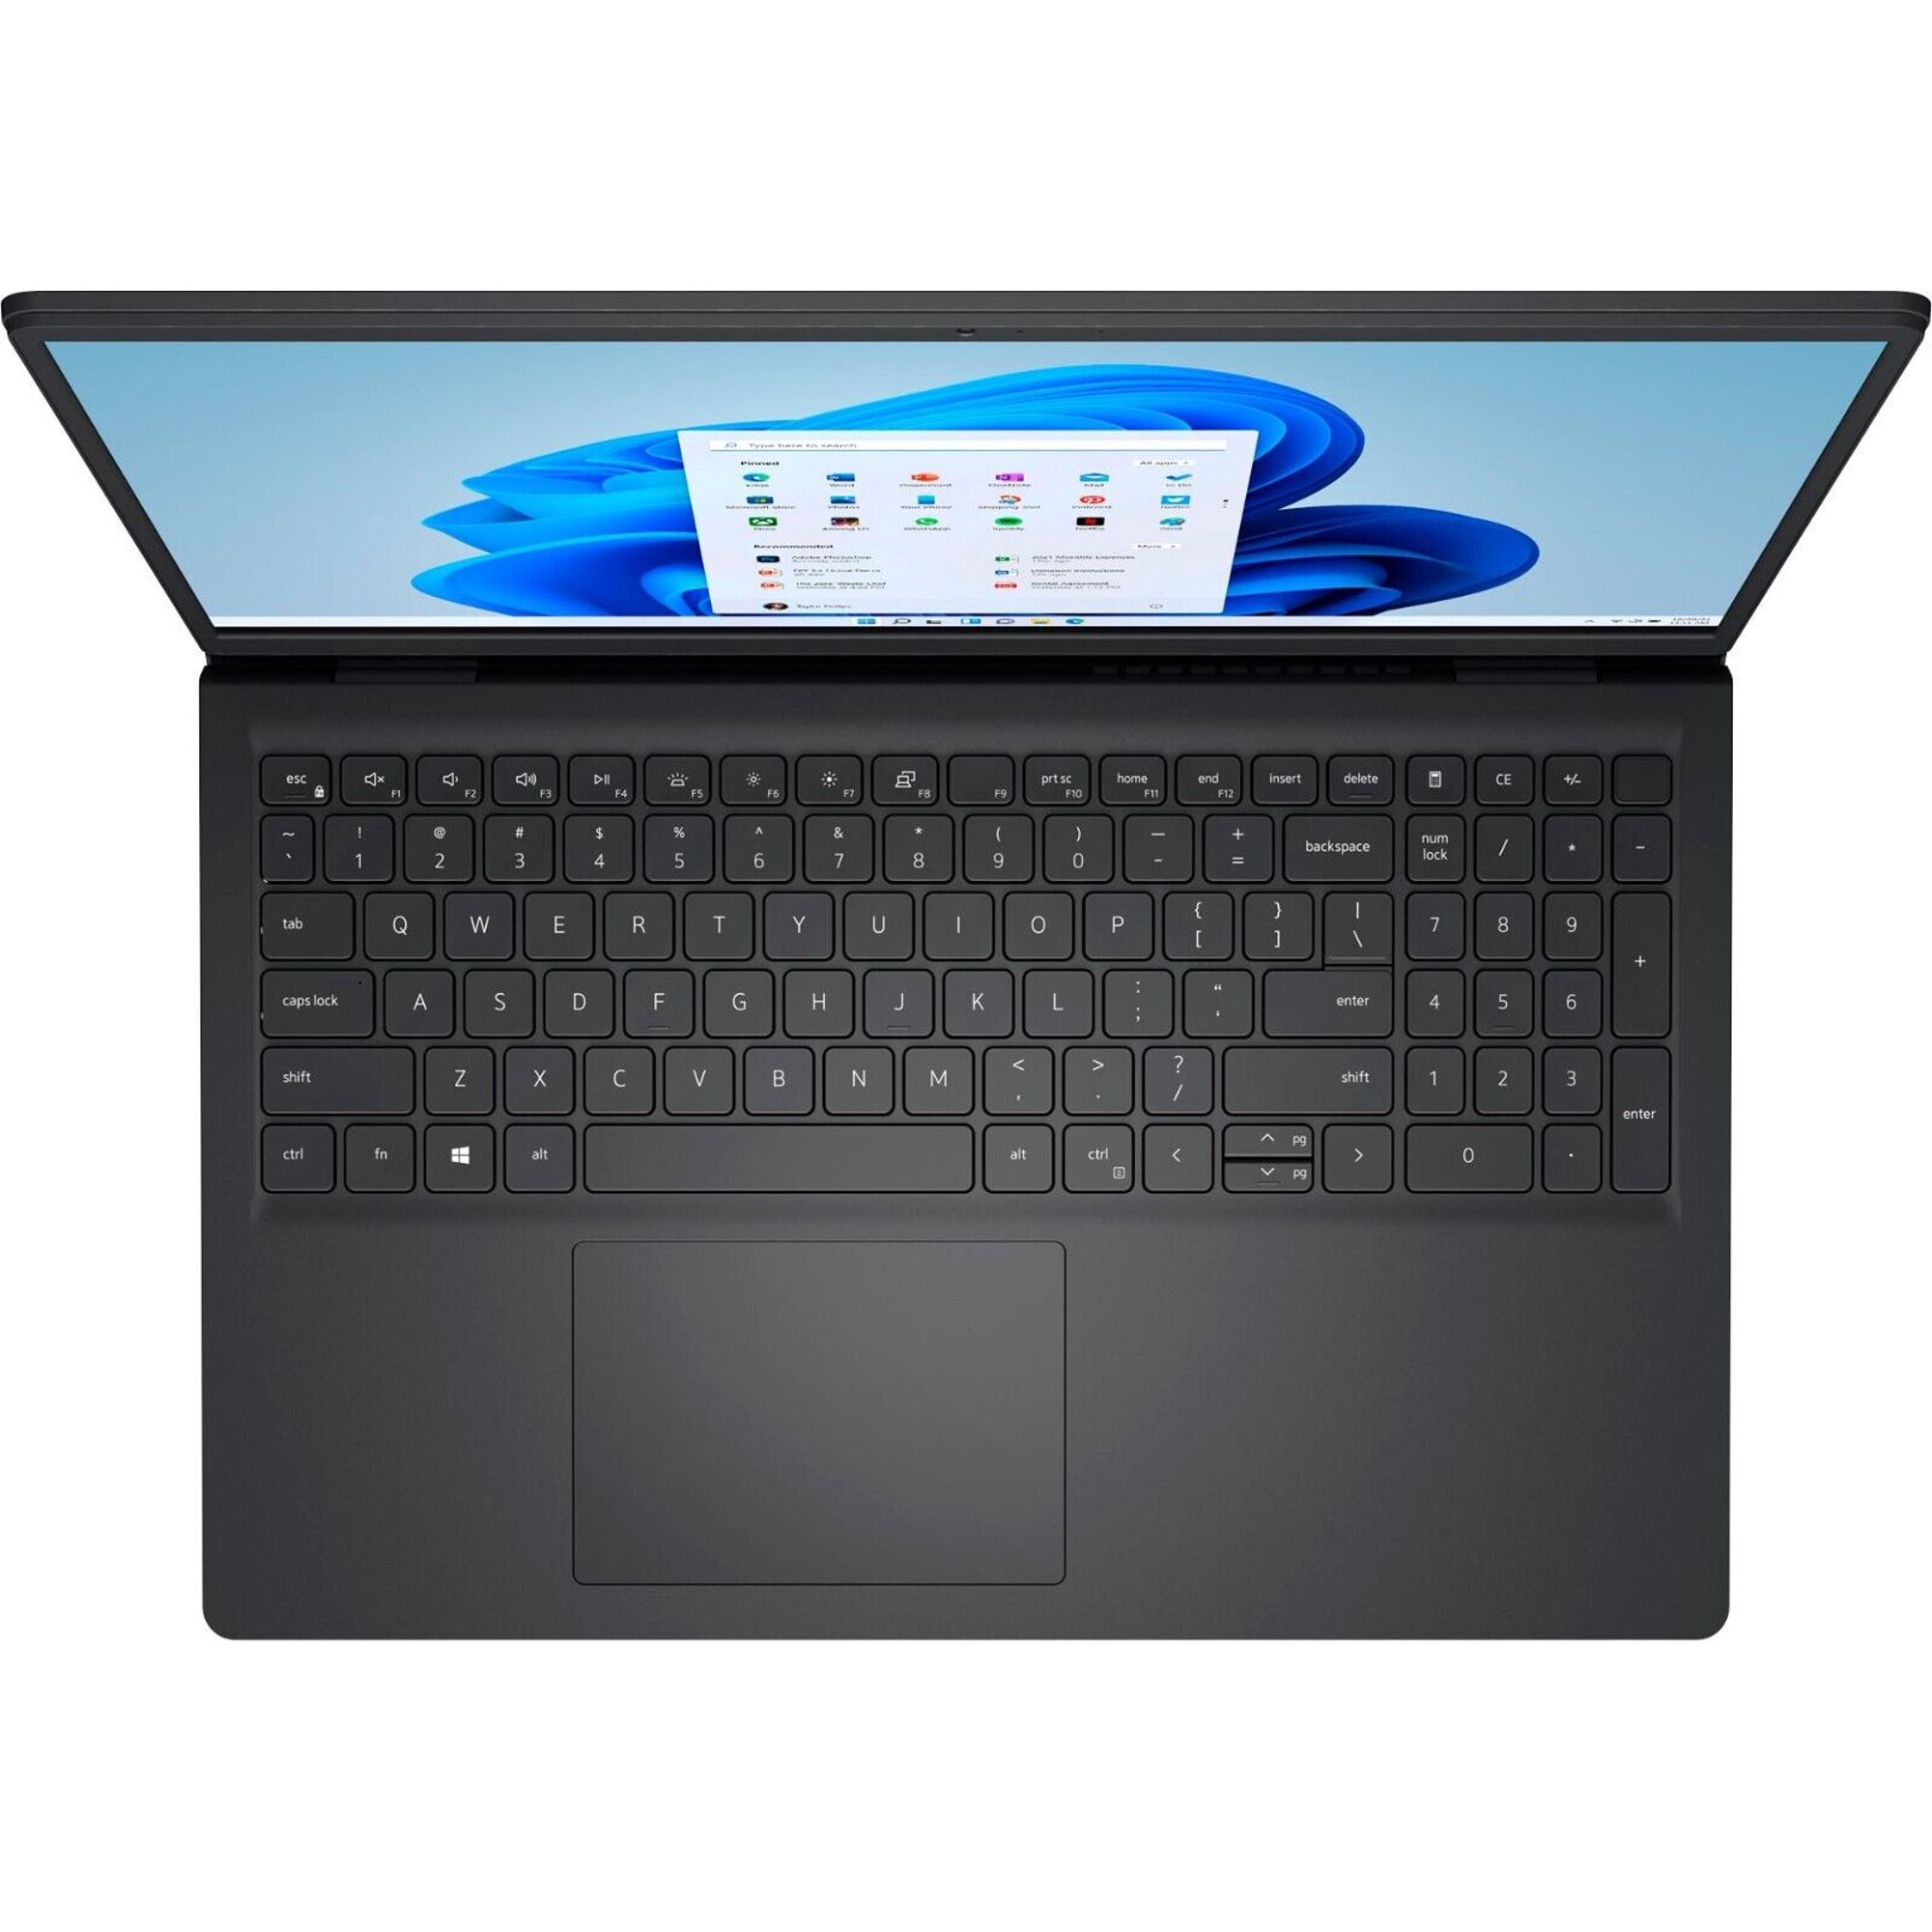 Dell Inspiron 3515 15.6" Non-Touch Laptop - AMD Ryzen 5, 8GB Memory, 256GB SSD - Carbon Black